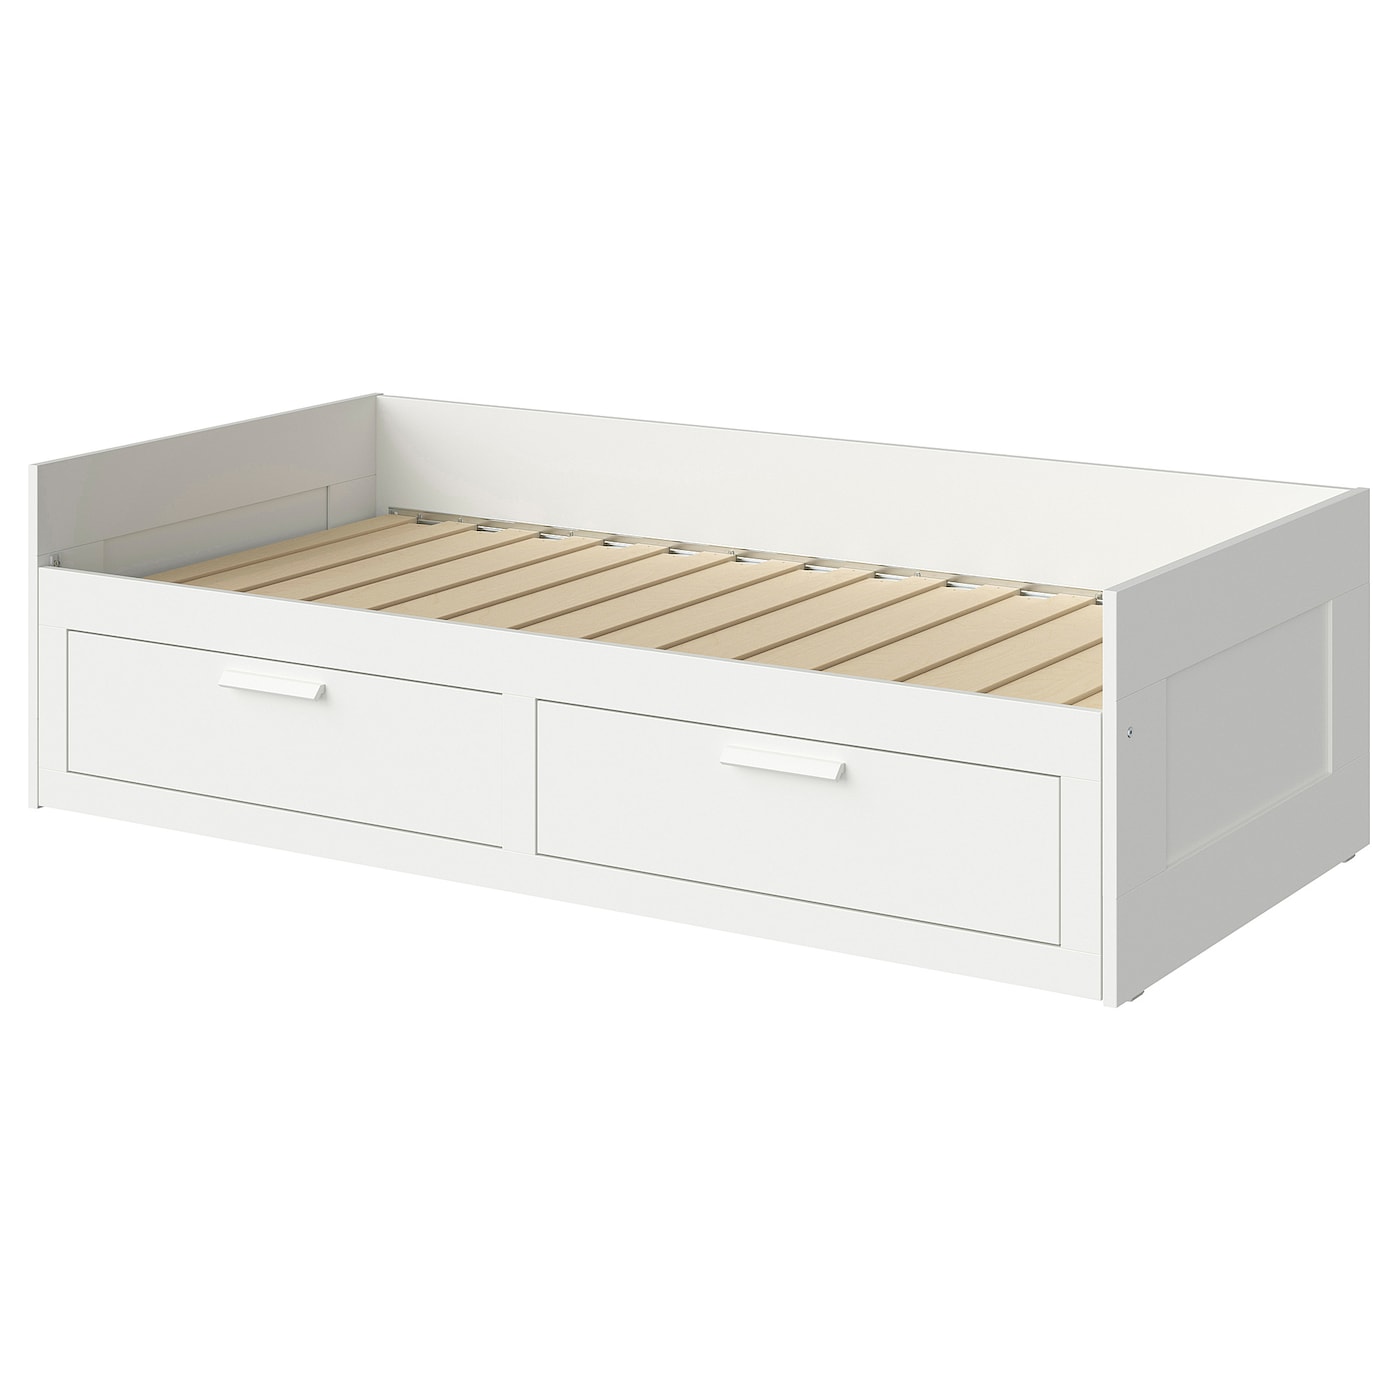 Каркас кровати-кушетки c 2 ящиками - IKEA BRIMNES, 80х200 см, белый, БРИМНЭС/БРИМНЕС ИКЕА